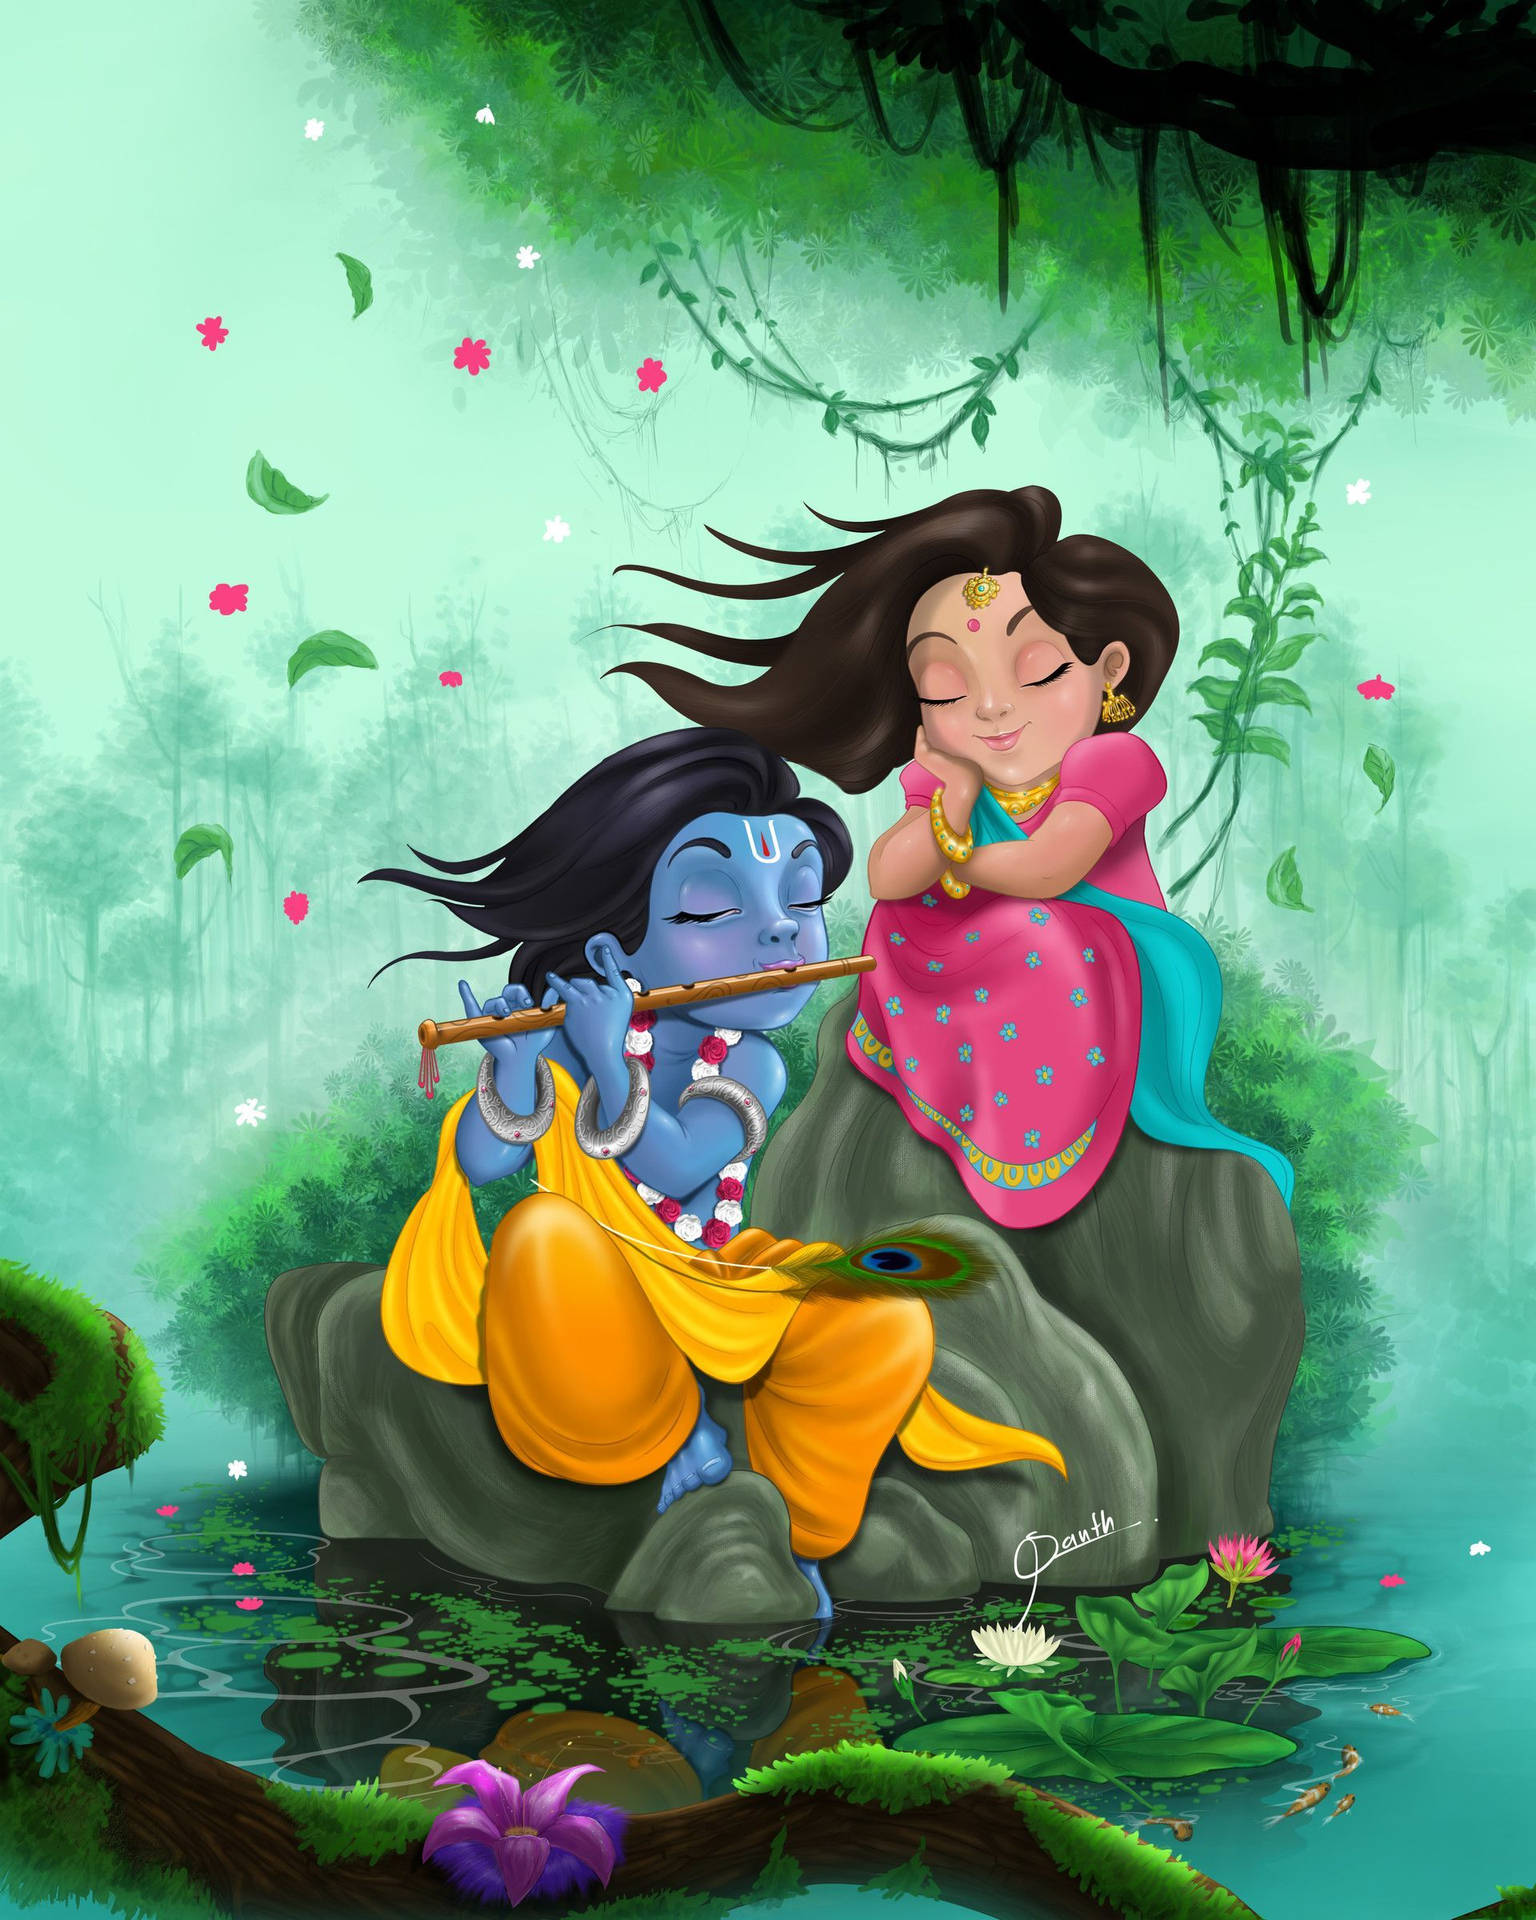 krishna animated wallpaper hd